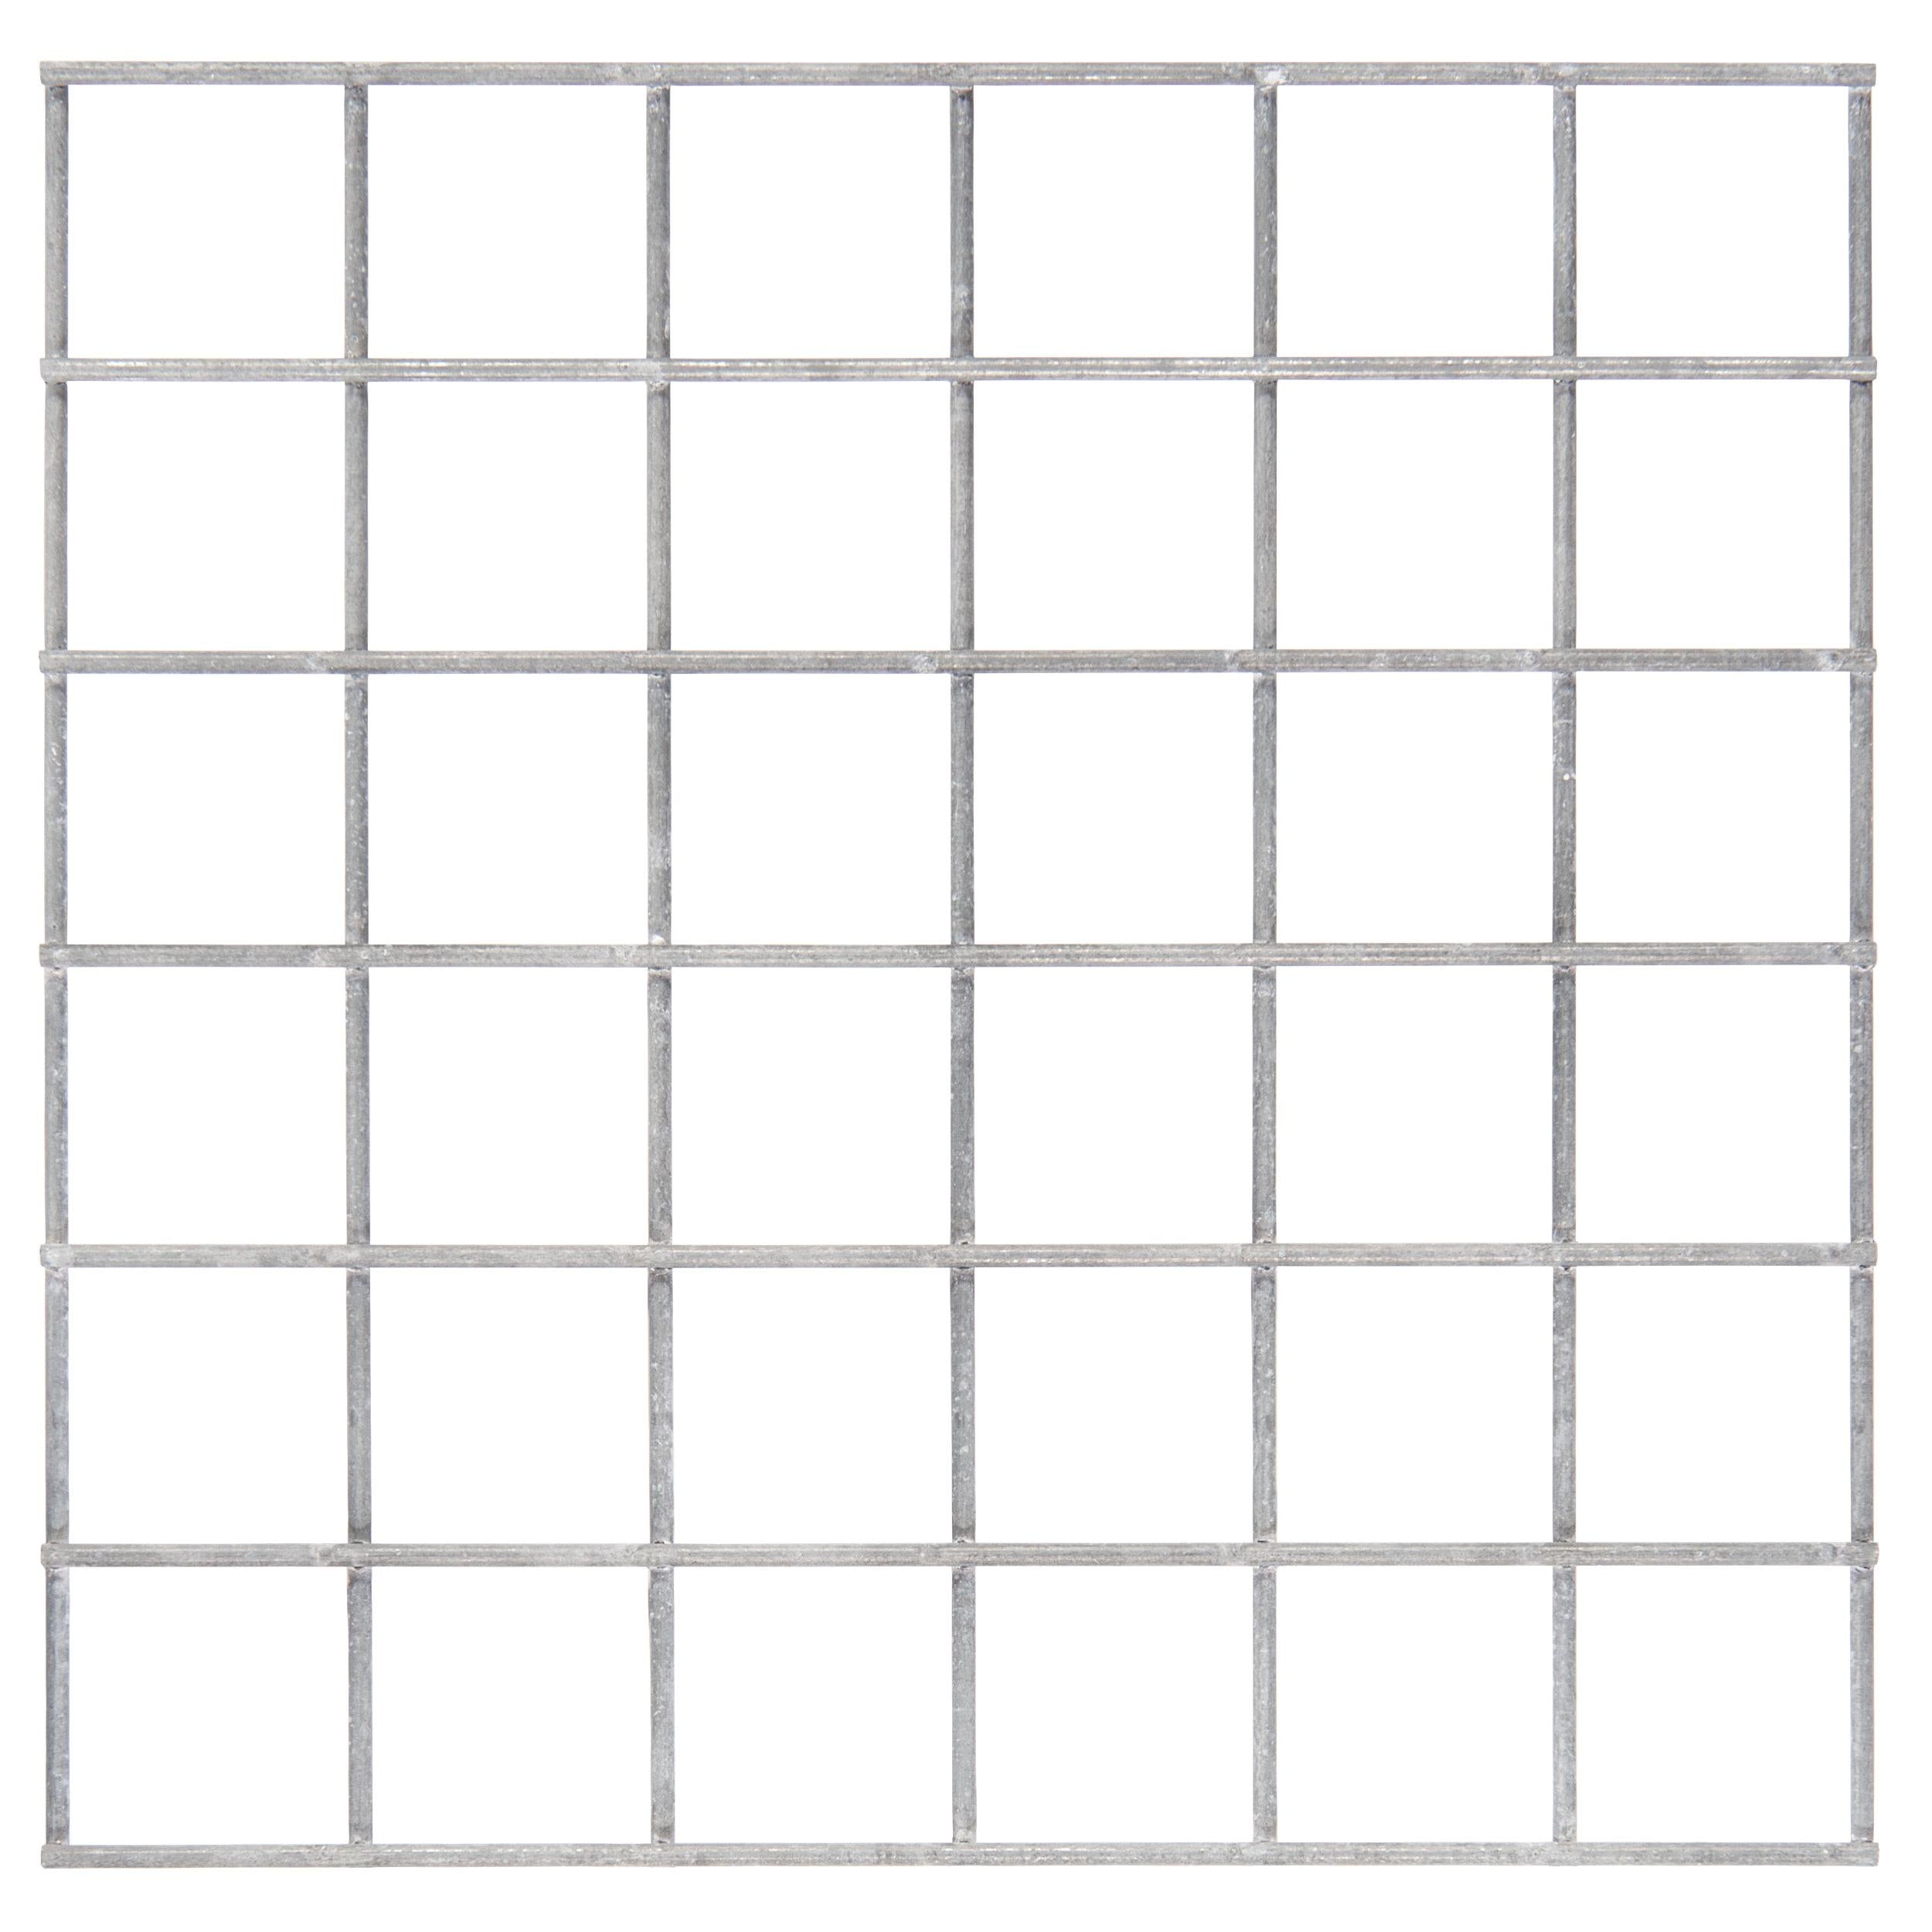 Grid 5 x 5 cm mesh size